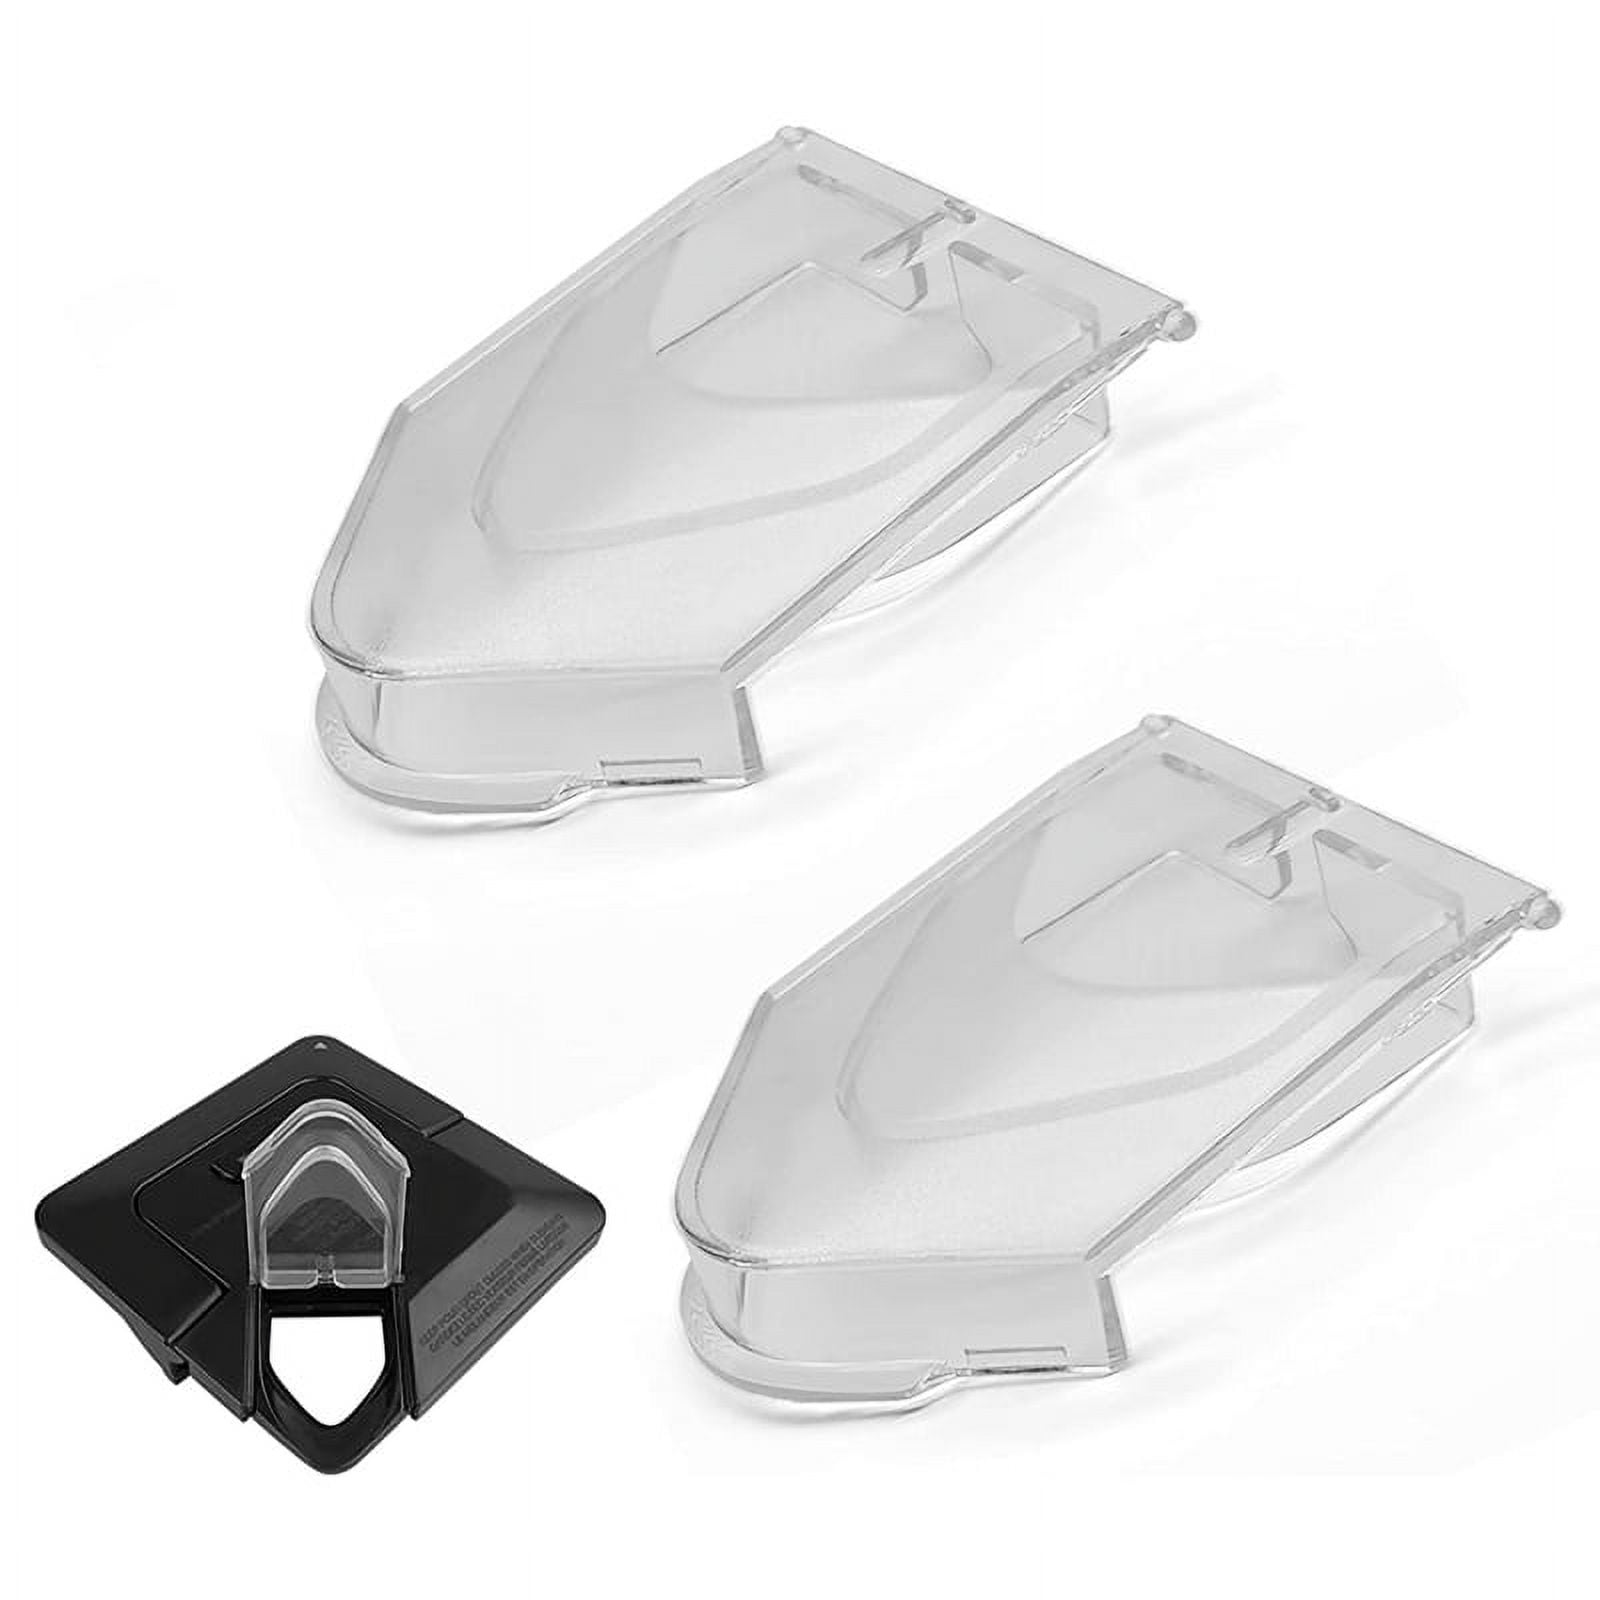 3pcs Lid Spout Cover Accessories For Ninja Blender For Ninja Blender 72 Oz  Pitcher Fits Nj600-nj602